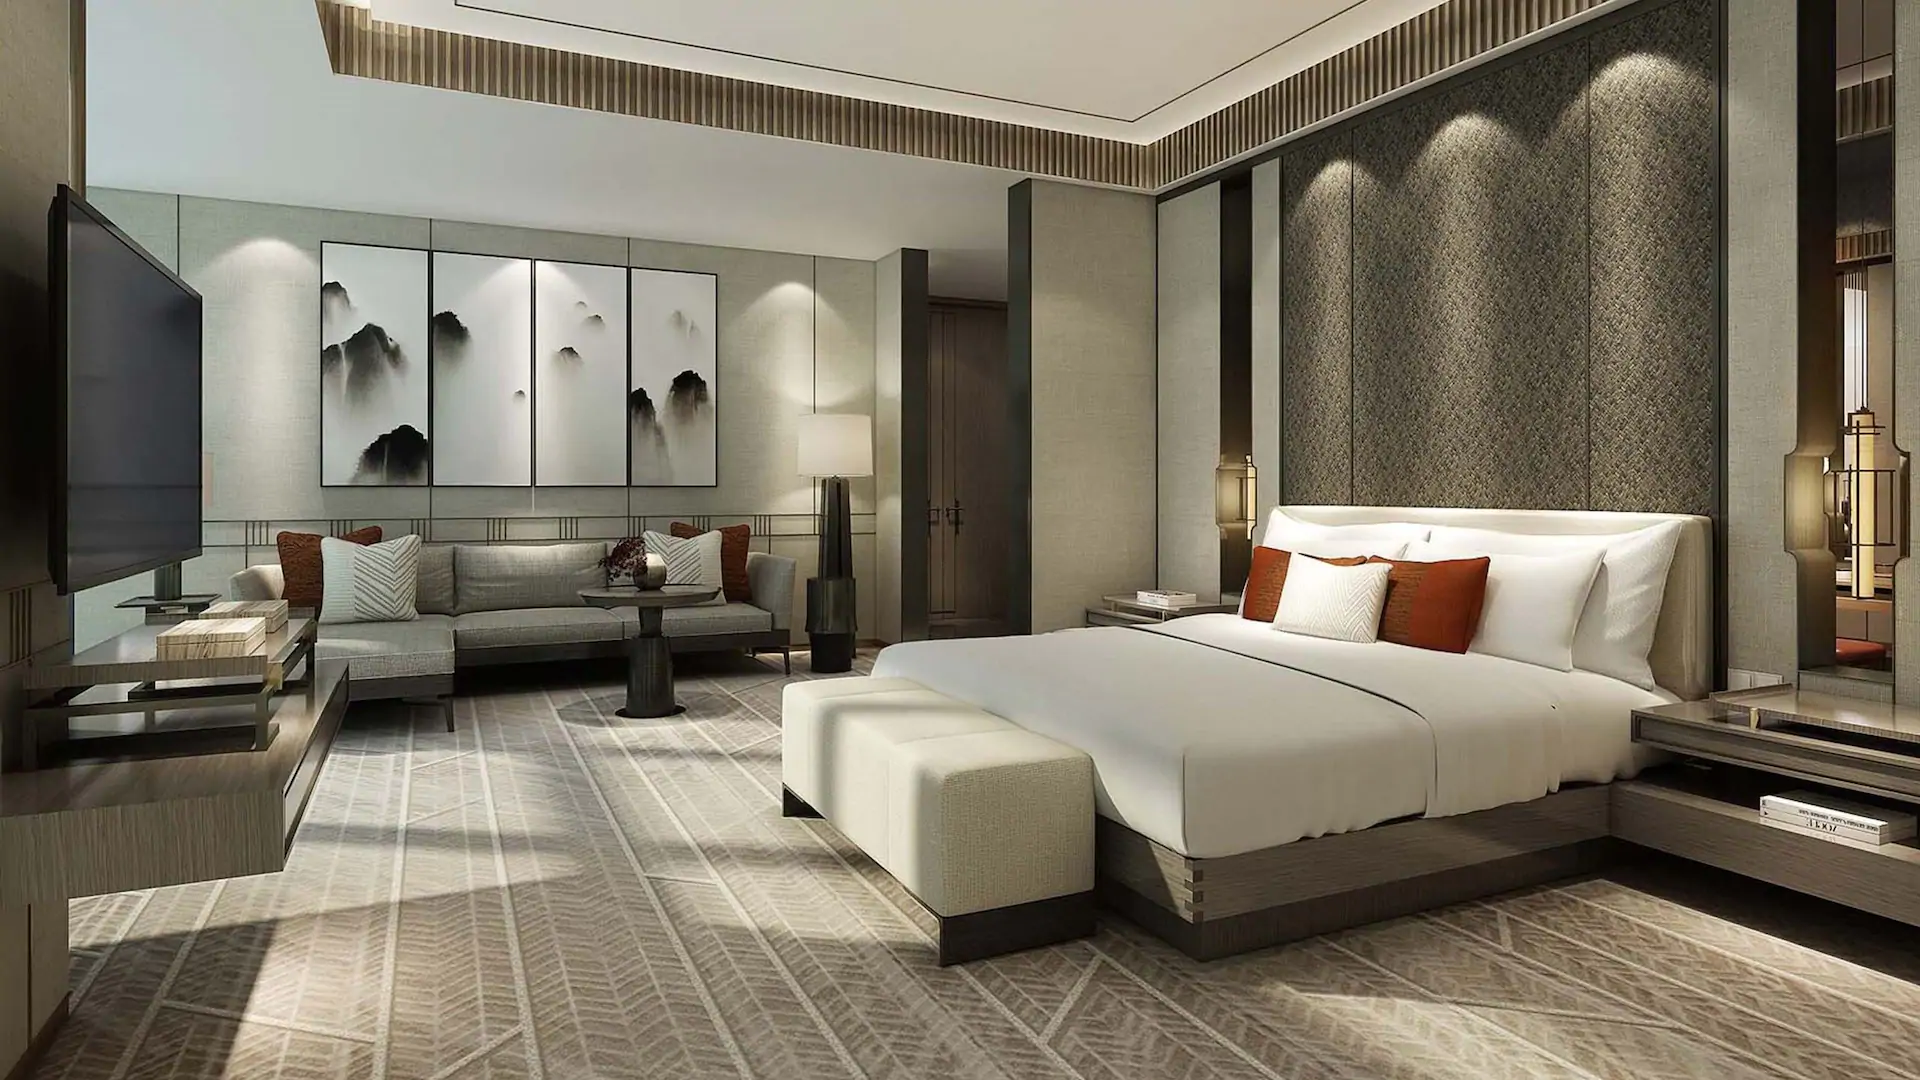 Hyatt ampliará su portafolio de hoteles de lujo